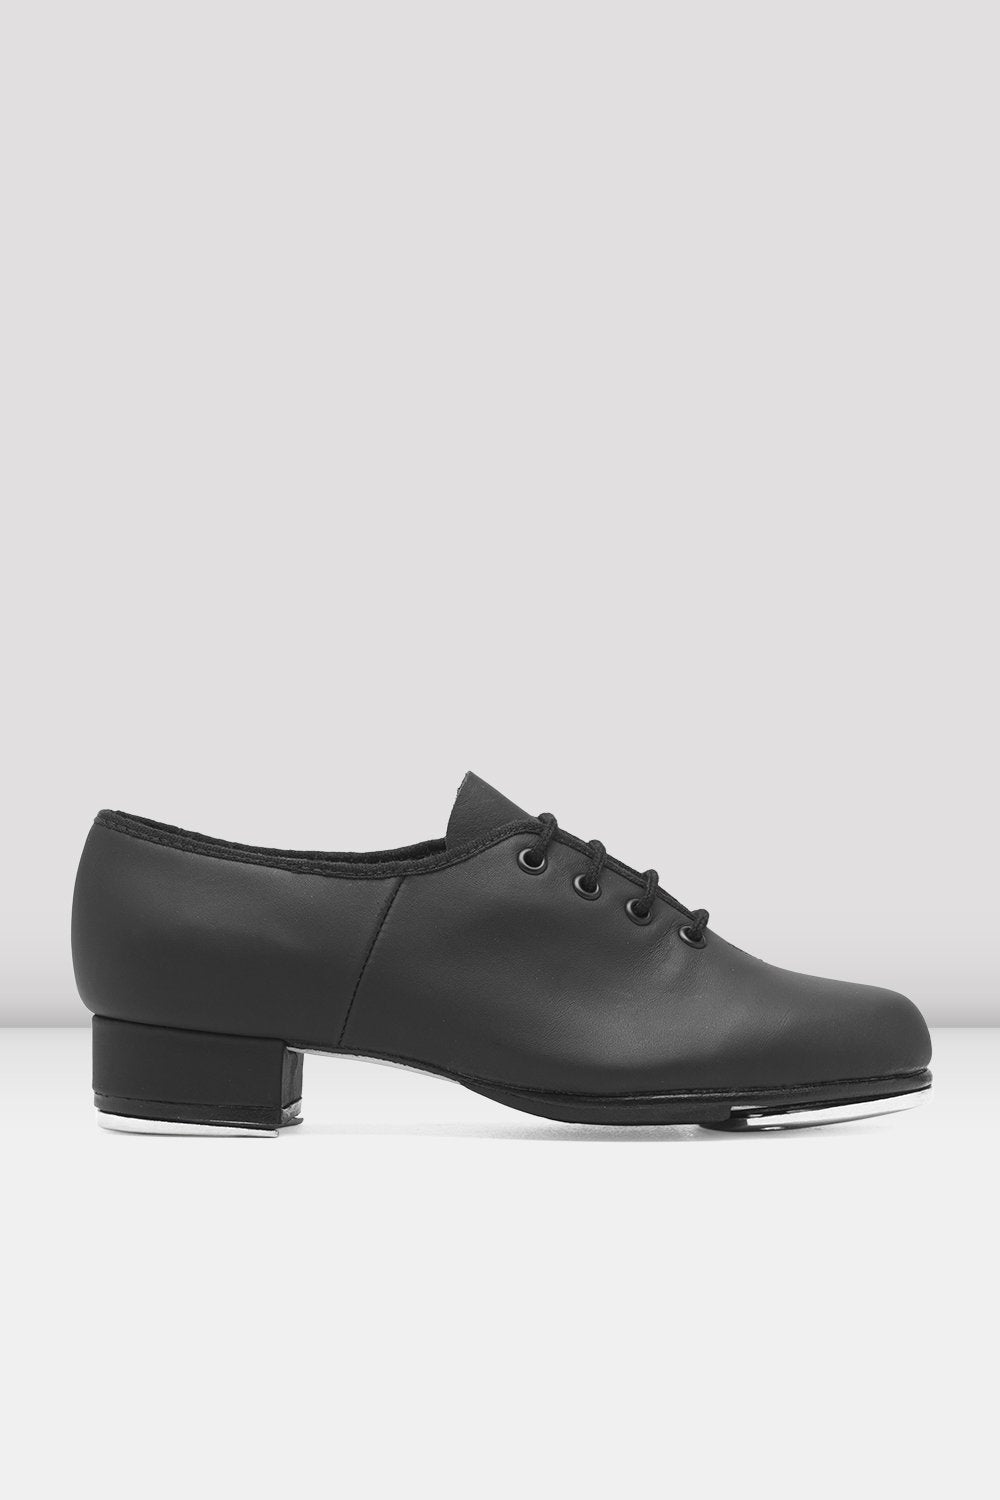 Ladies Jazz Tap Leather Tap Shoes, Black | BLOCH USA – Bloch